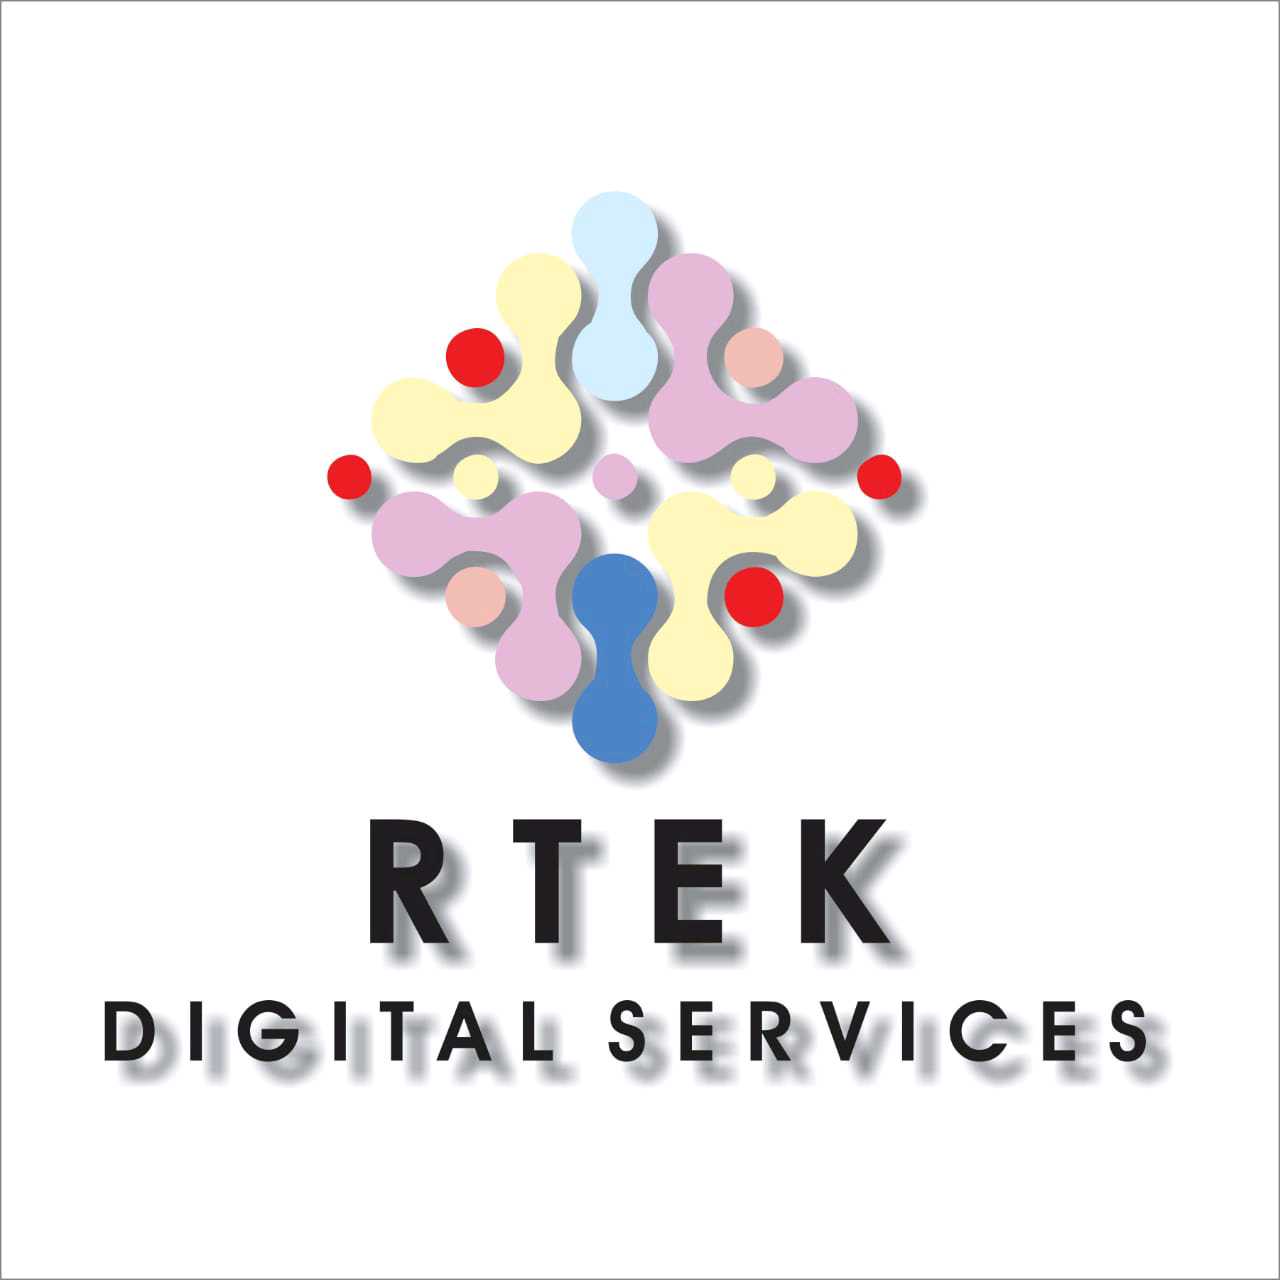 Rtek Digital Services cover imag